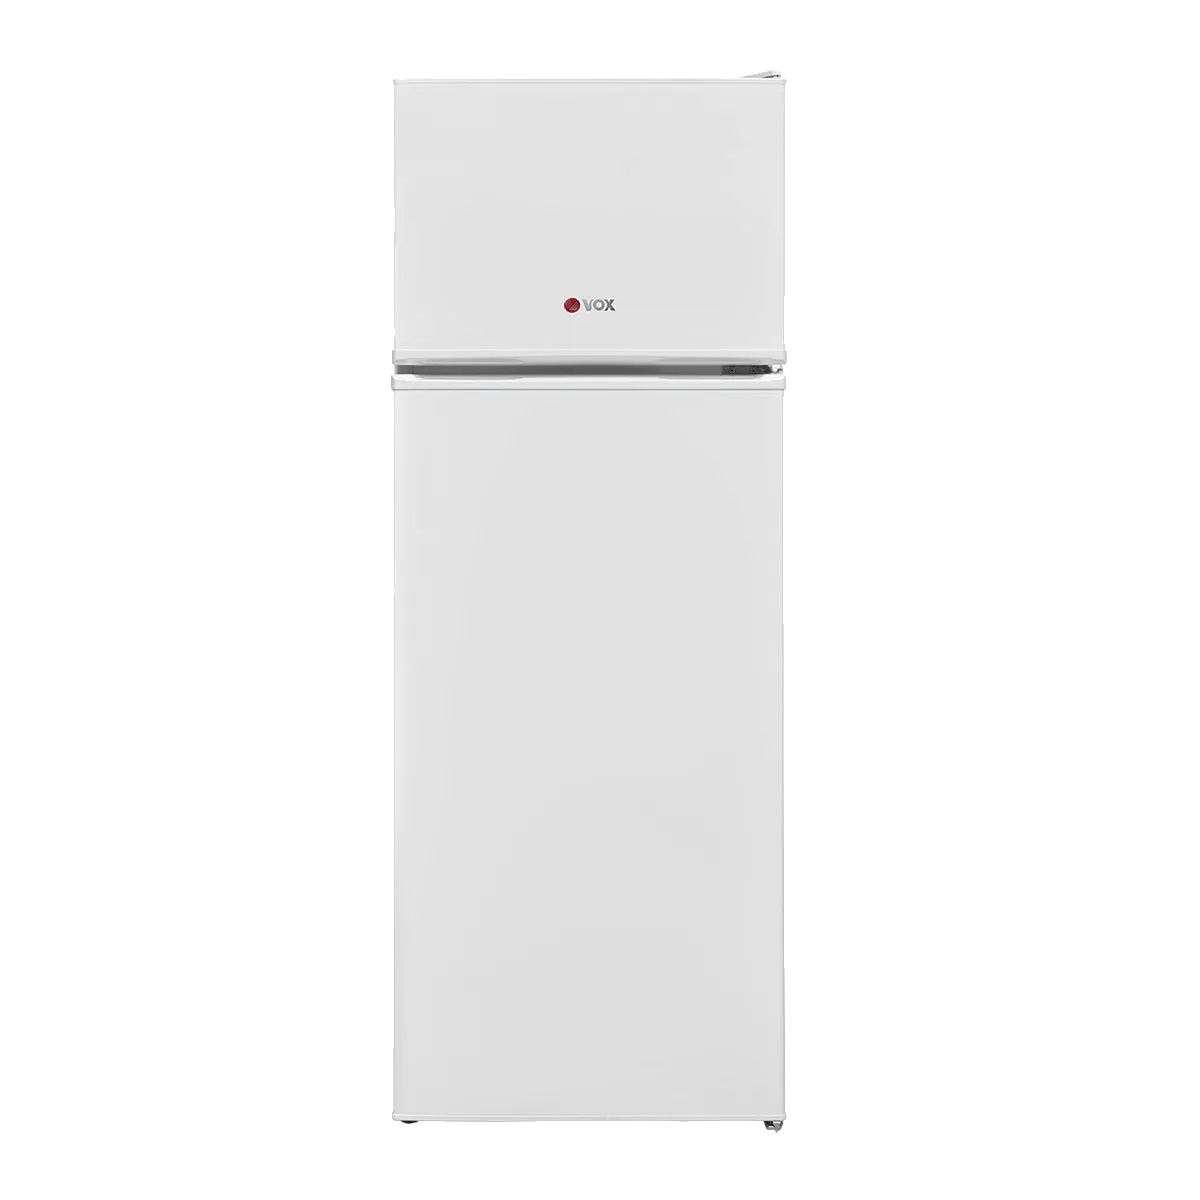 Refrigerator KG 2550 F 